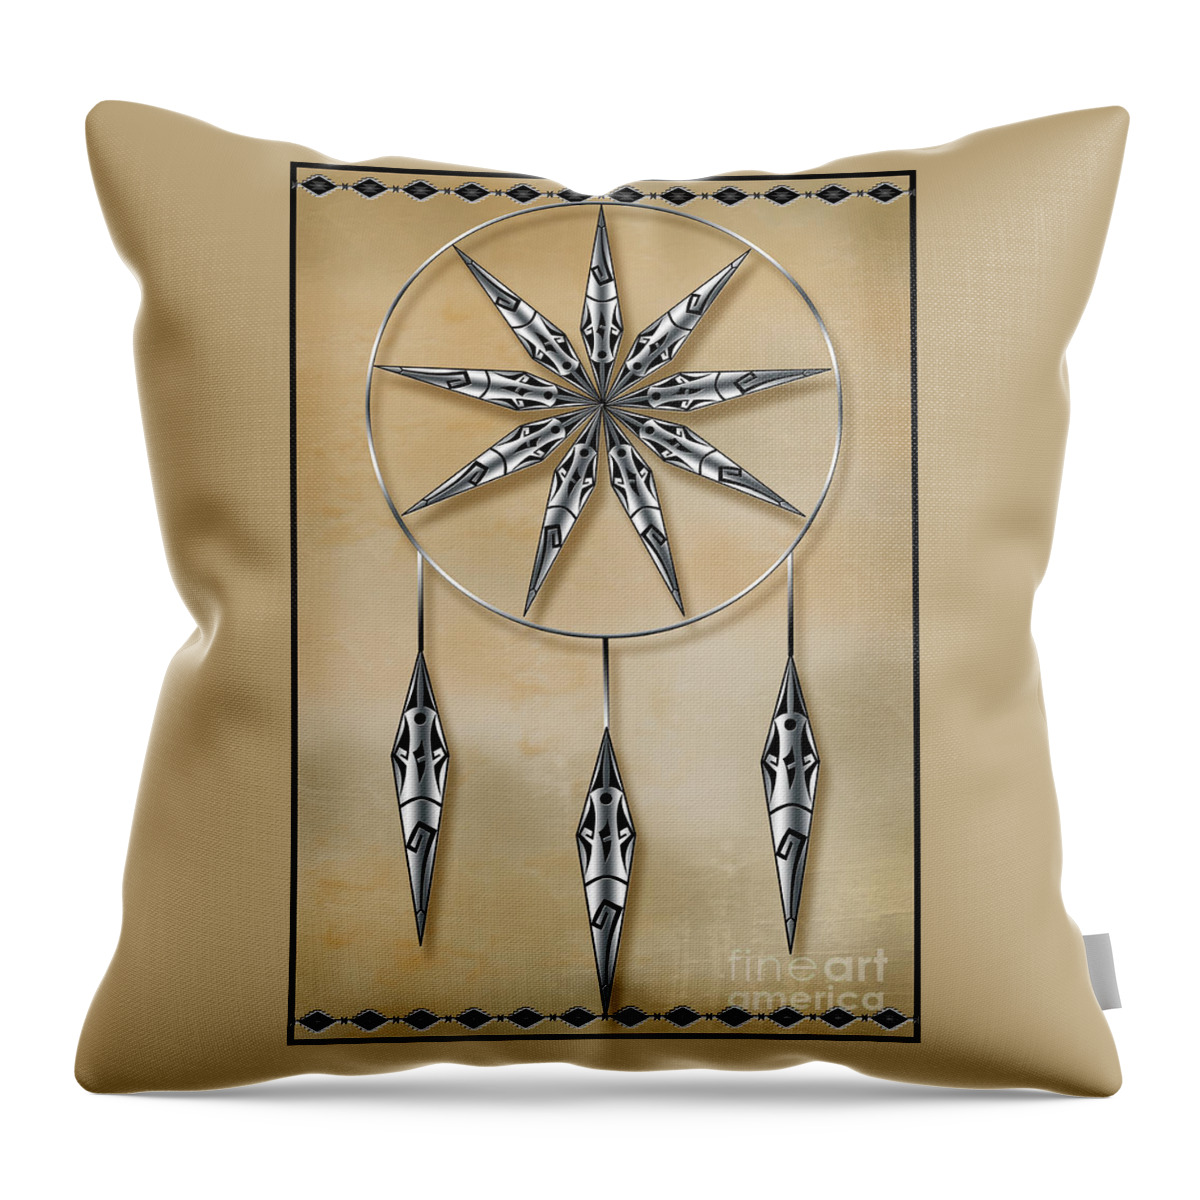 Mandala Throw Pillow featuring the digital art Mandala in Silver by Tim Hightower